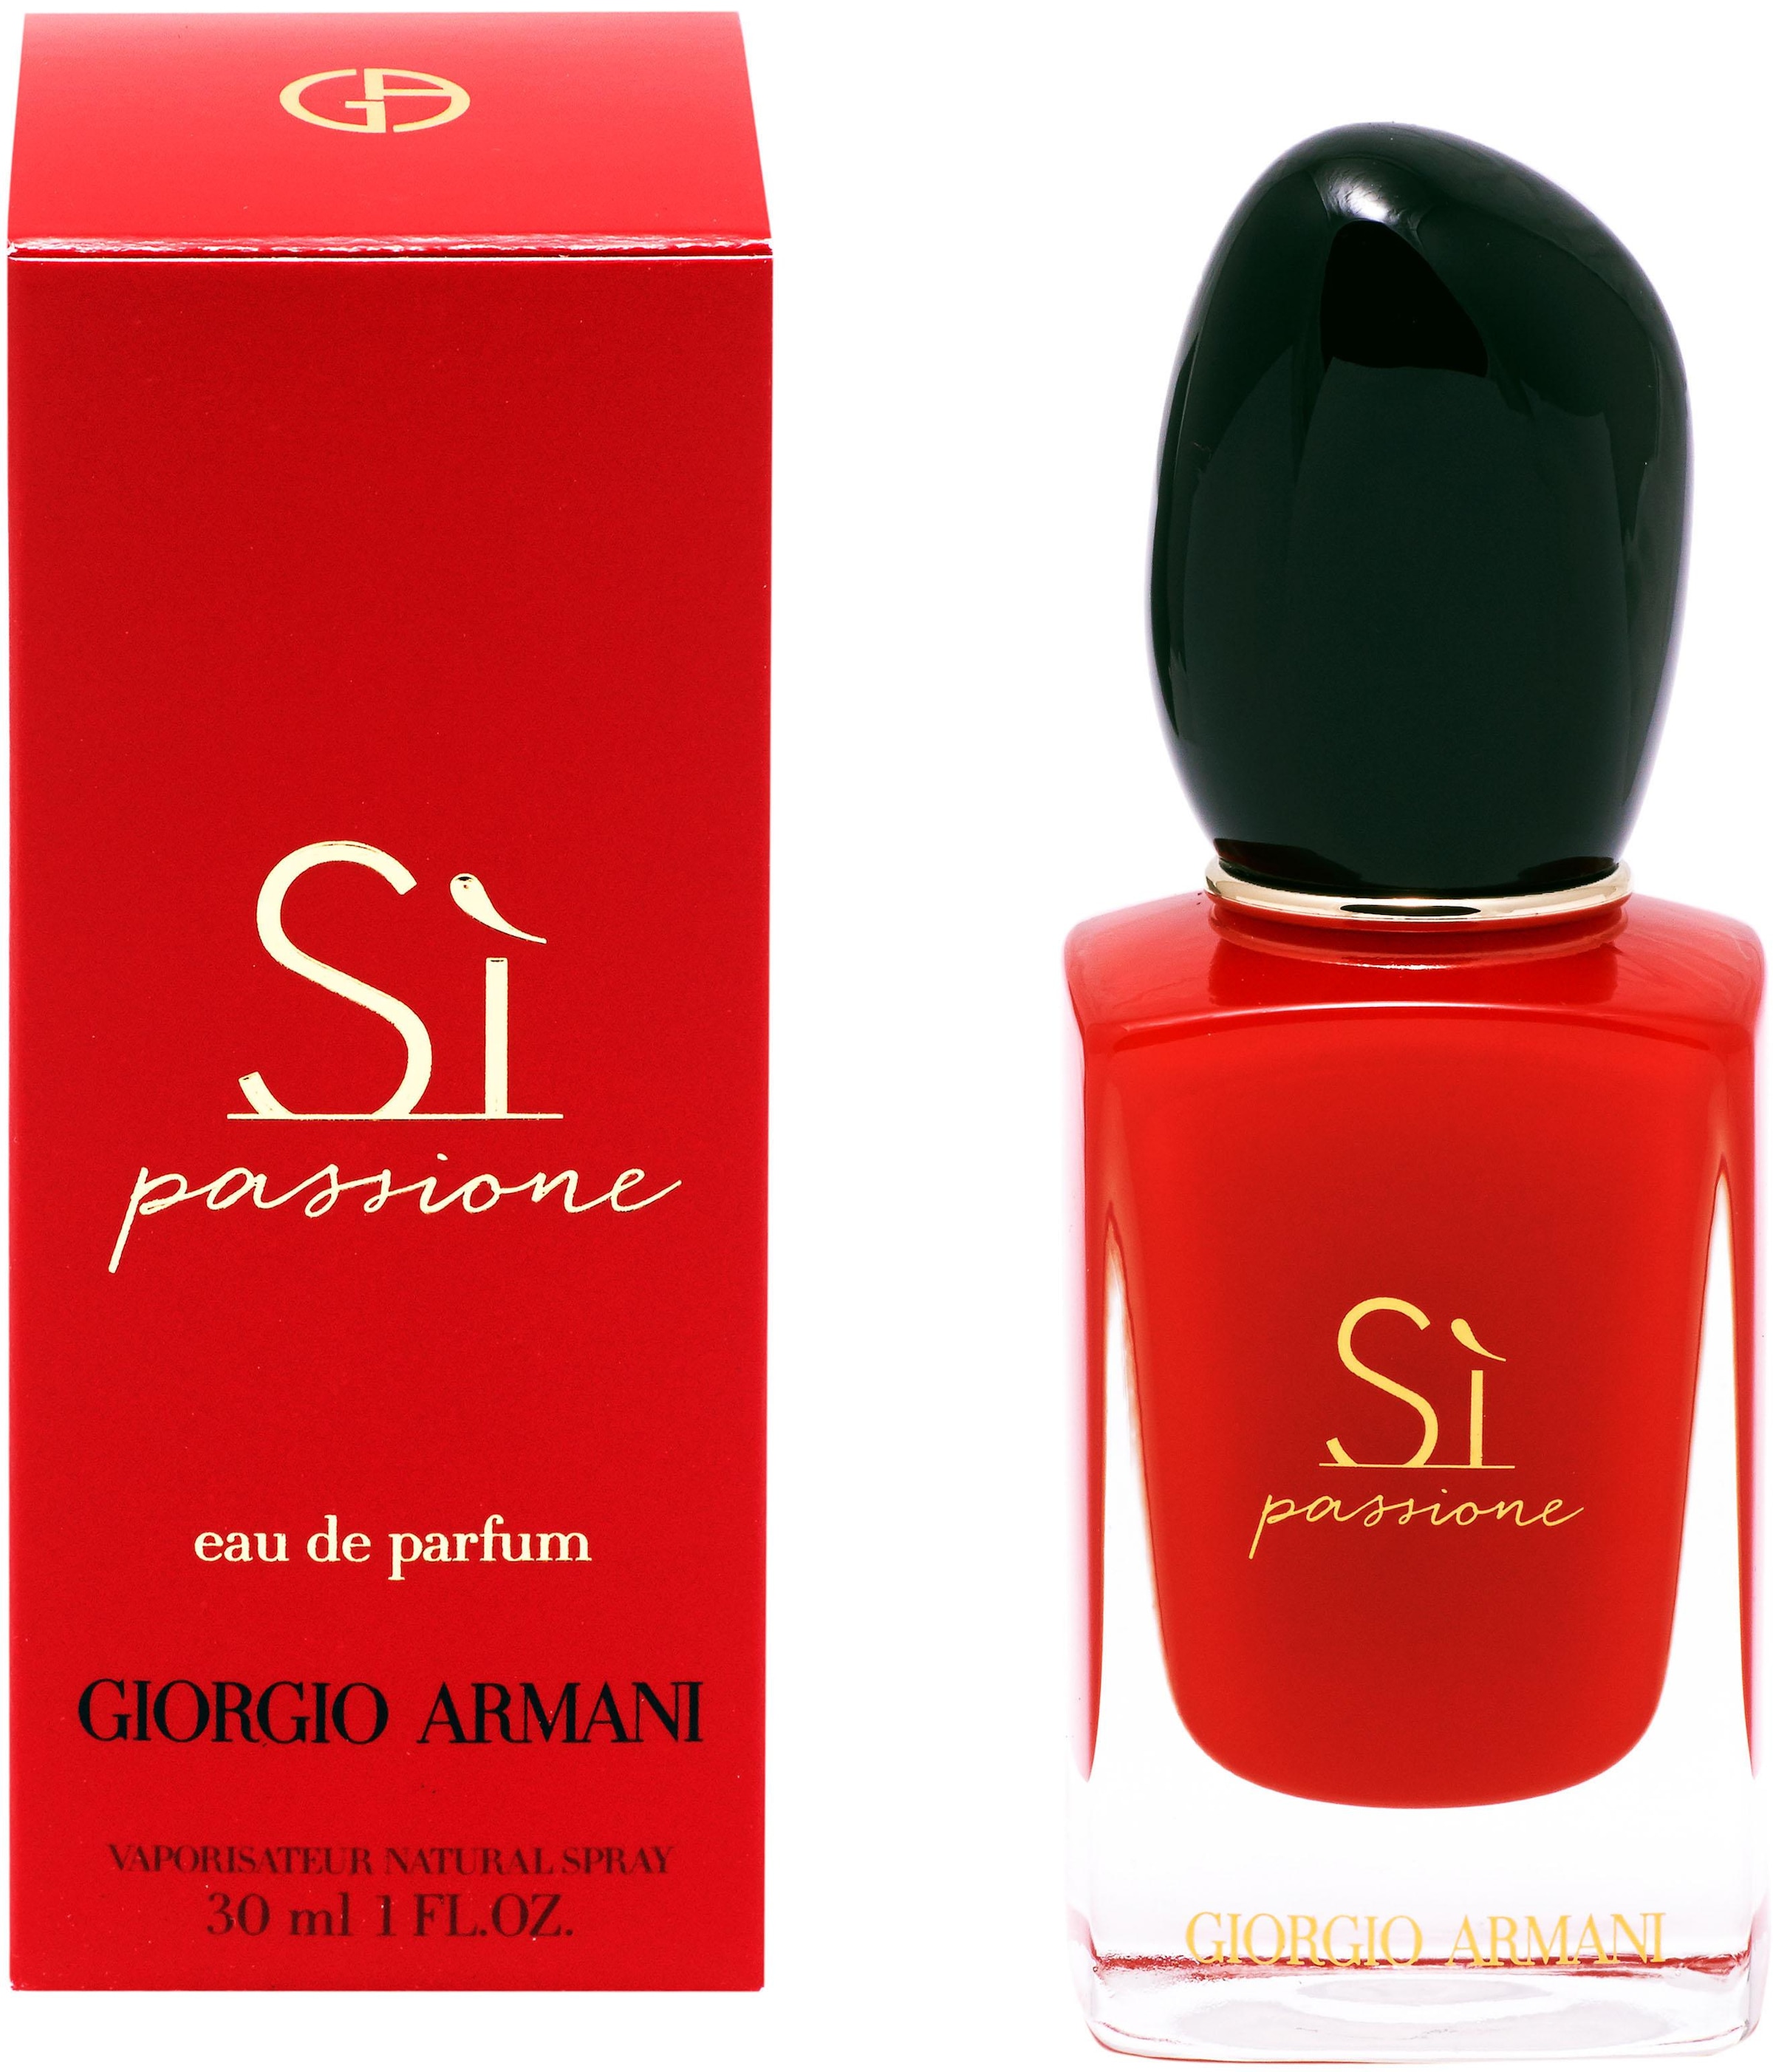 Giorgio Armani Eau de Parfum »Si Passione«